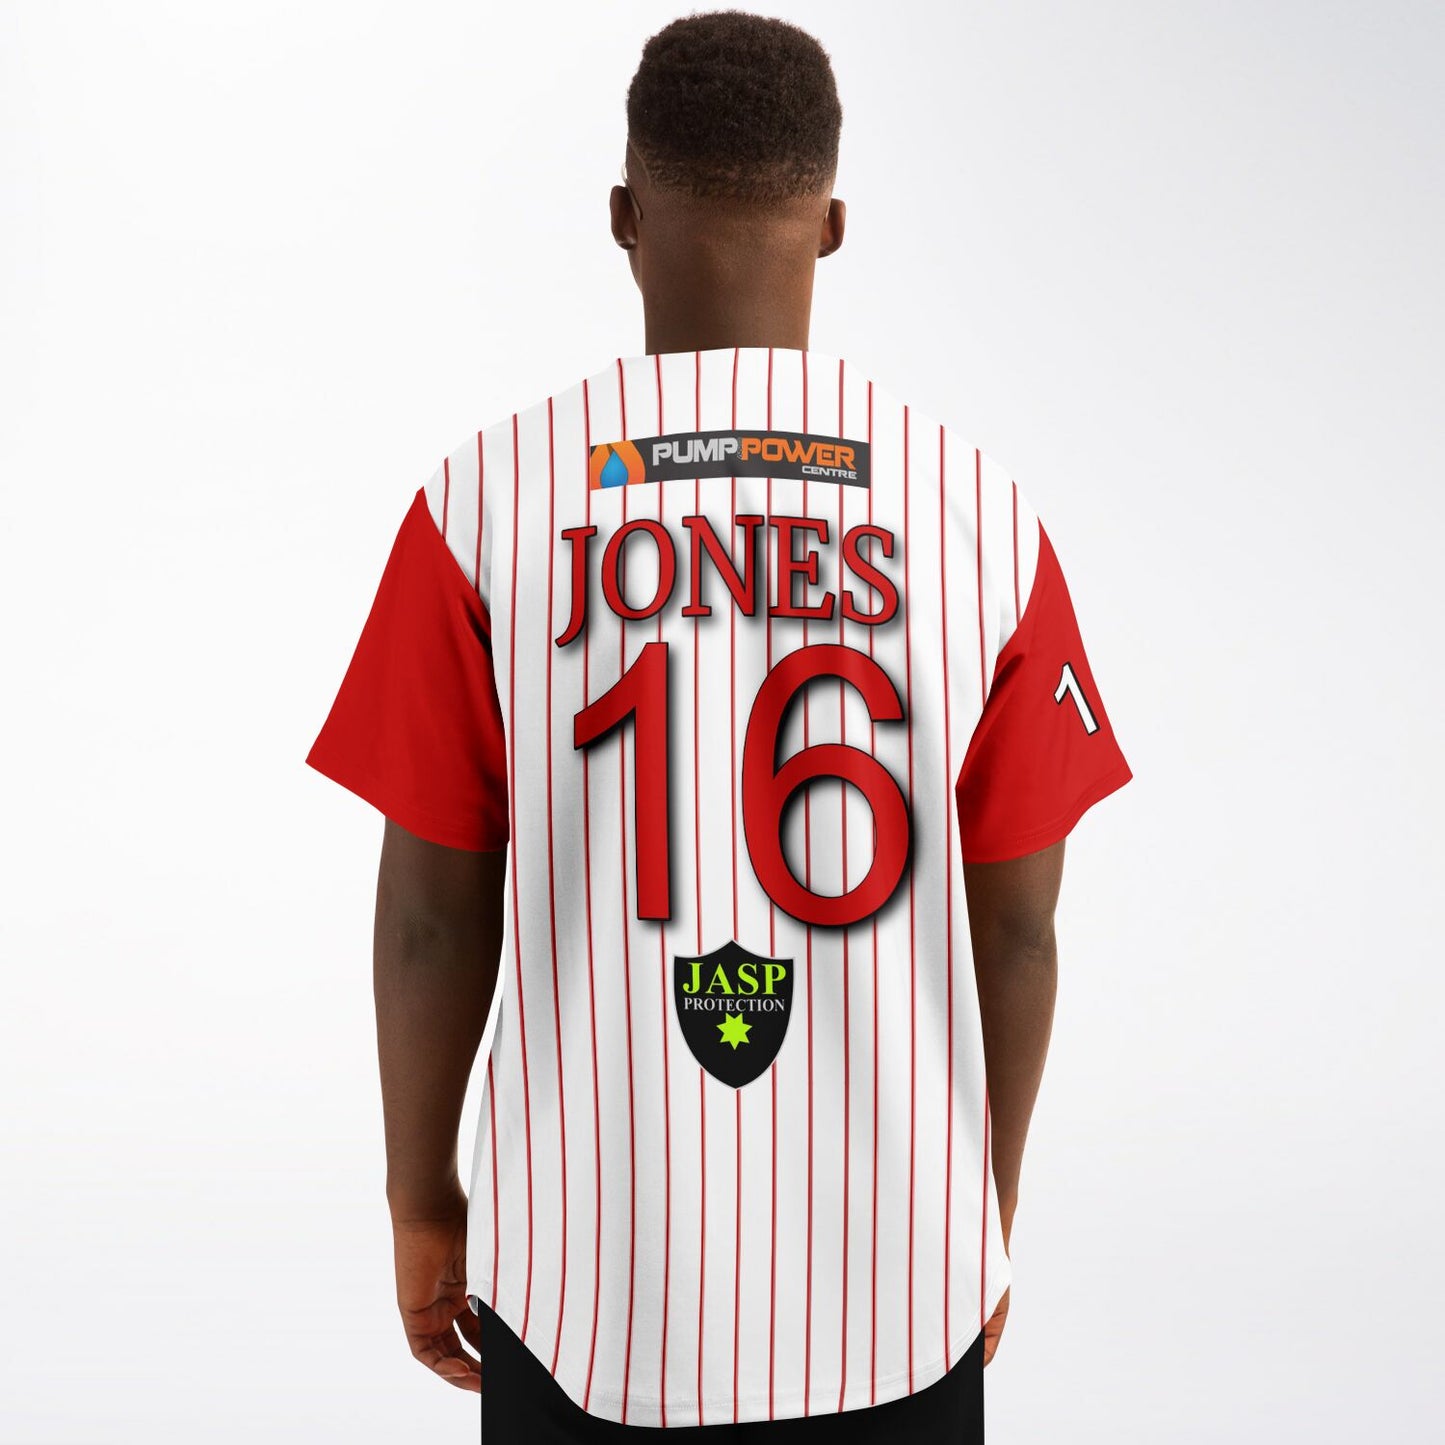 Dwayne Jones #16 Demons Baseball Jersey - Home